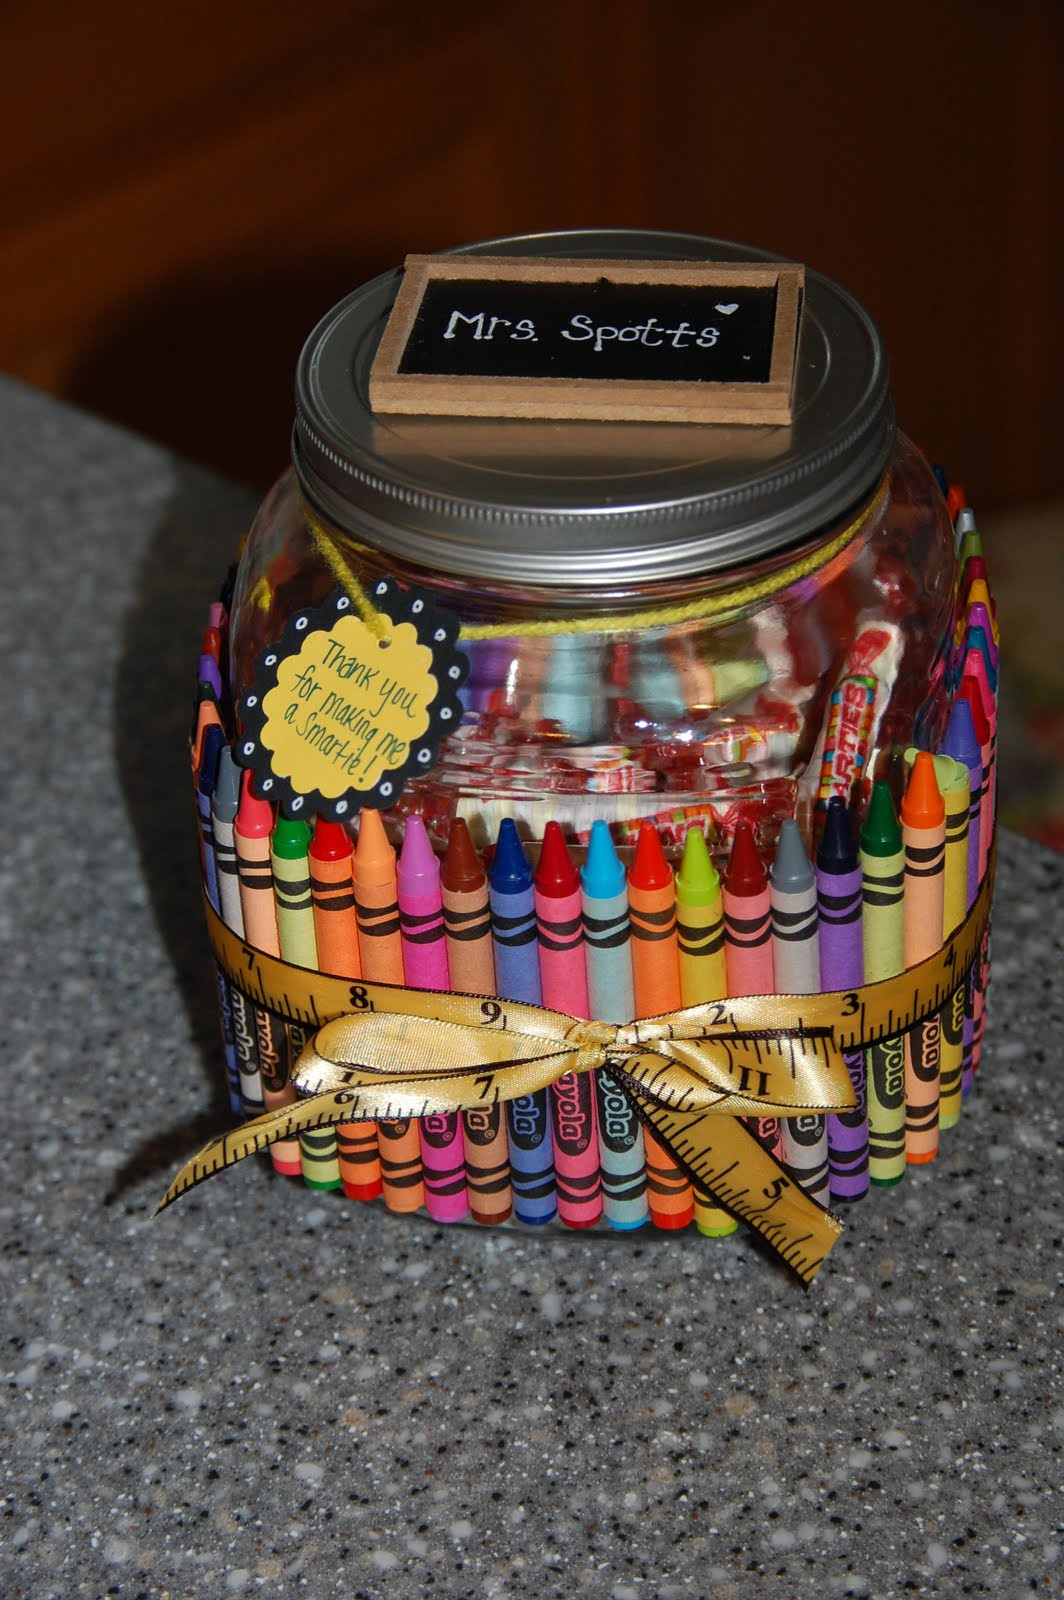 Best ideas about Preschool Teachers Gift Ideas
. Save or Pin My Remodeled Nest Last Day of Preschool & Teacher Gift Now.